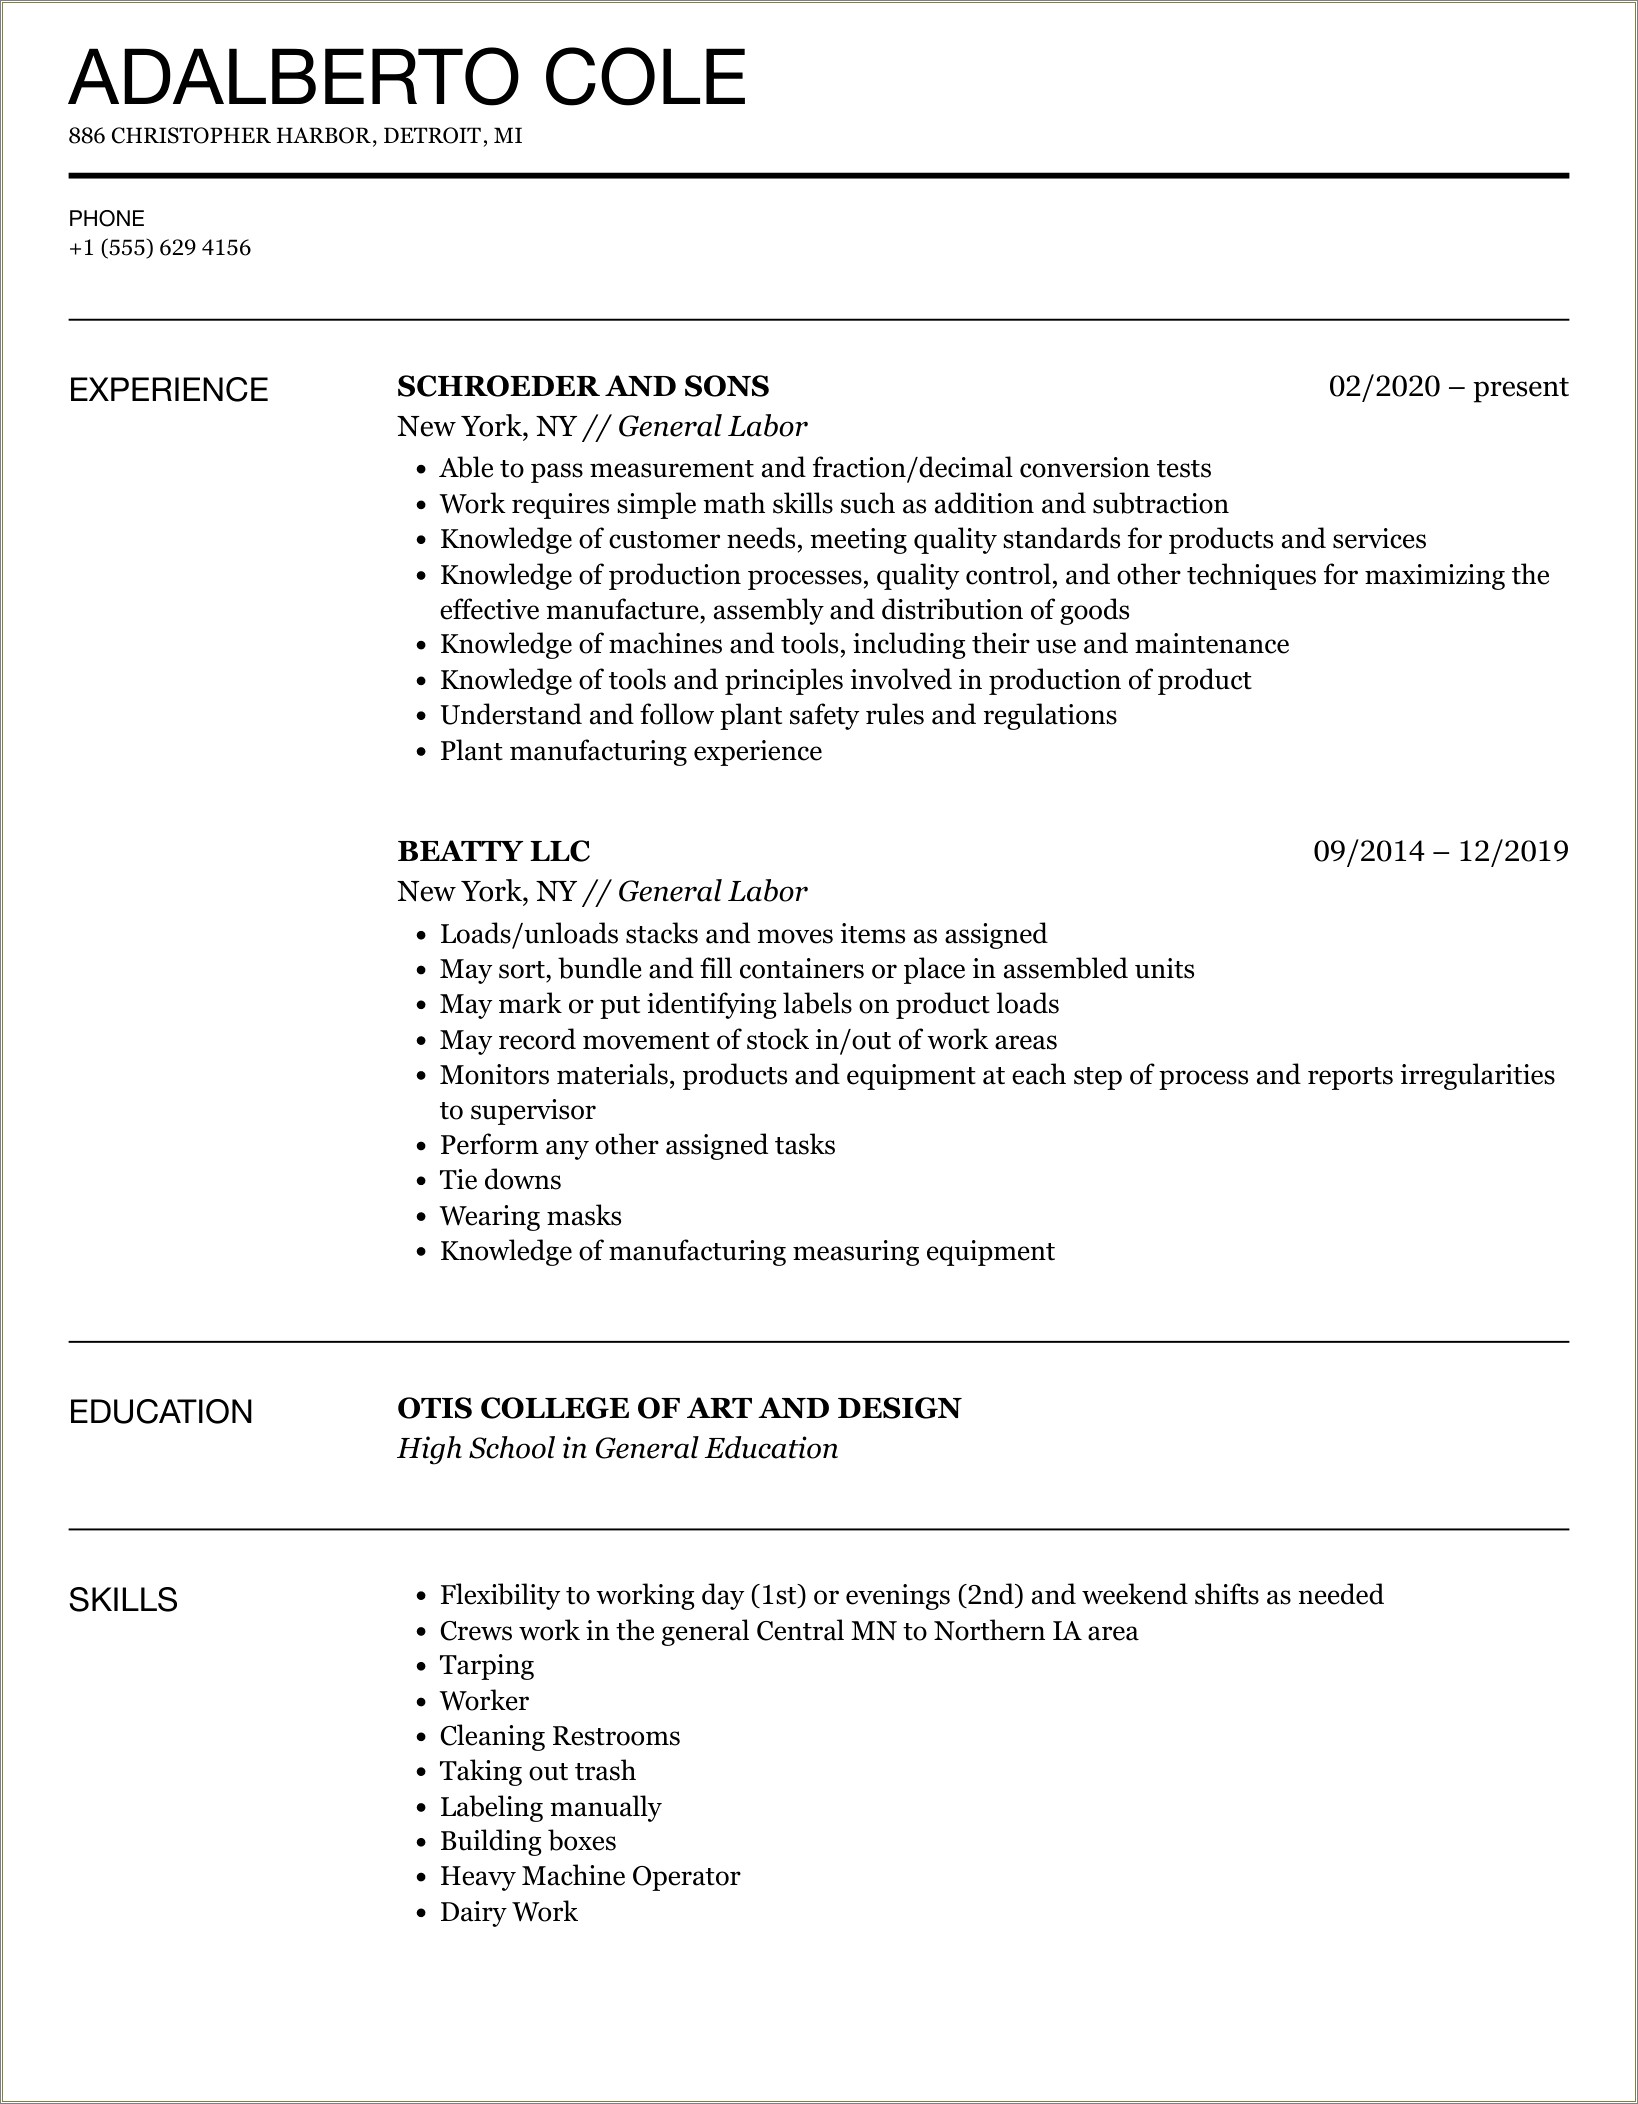 Resume Examples Manual Labor Job S